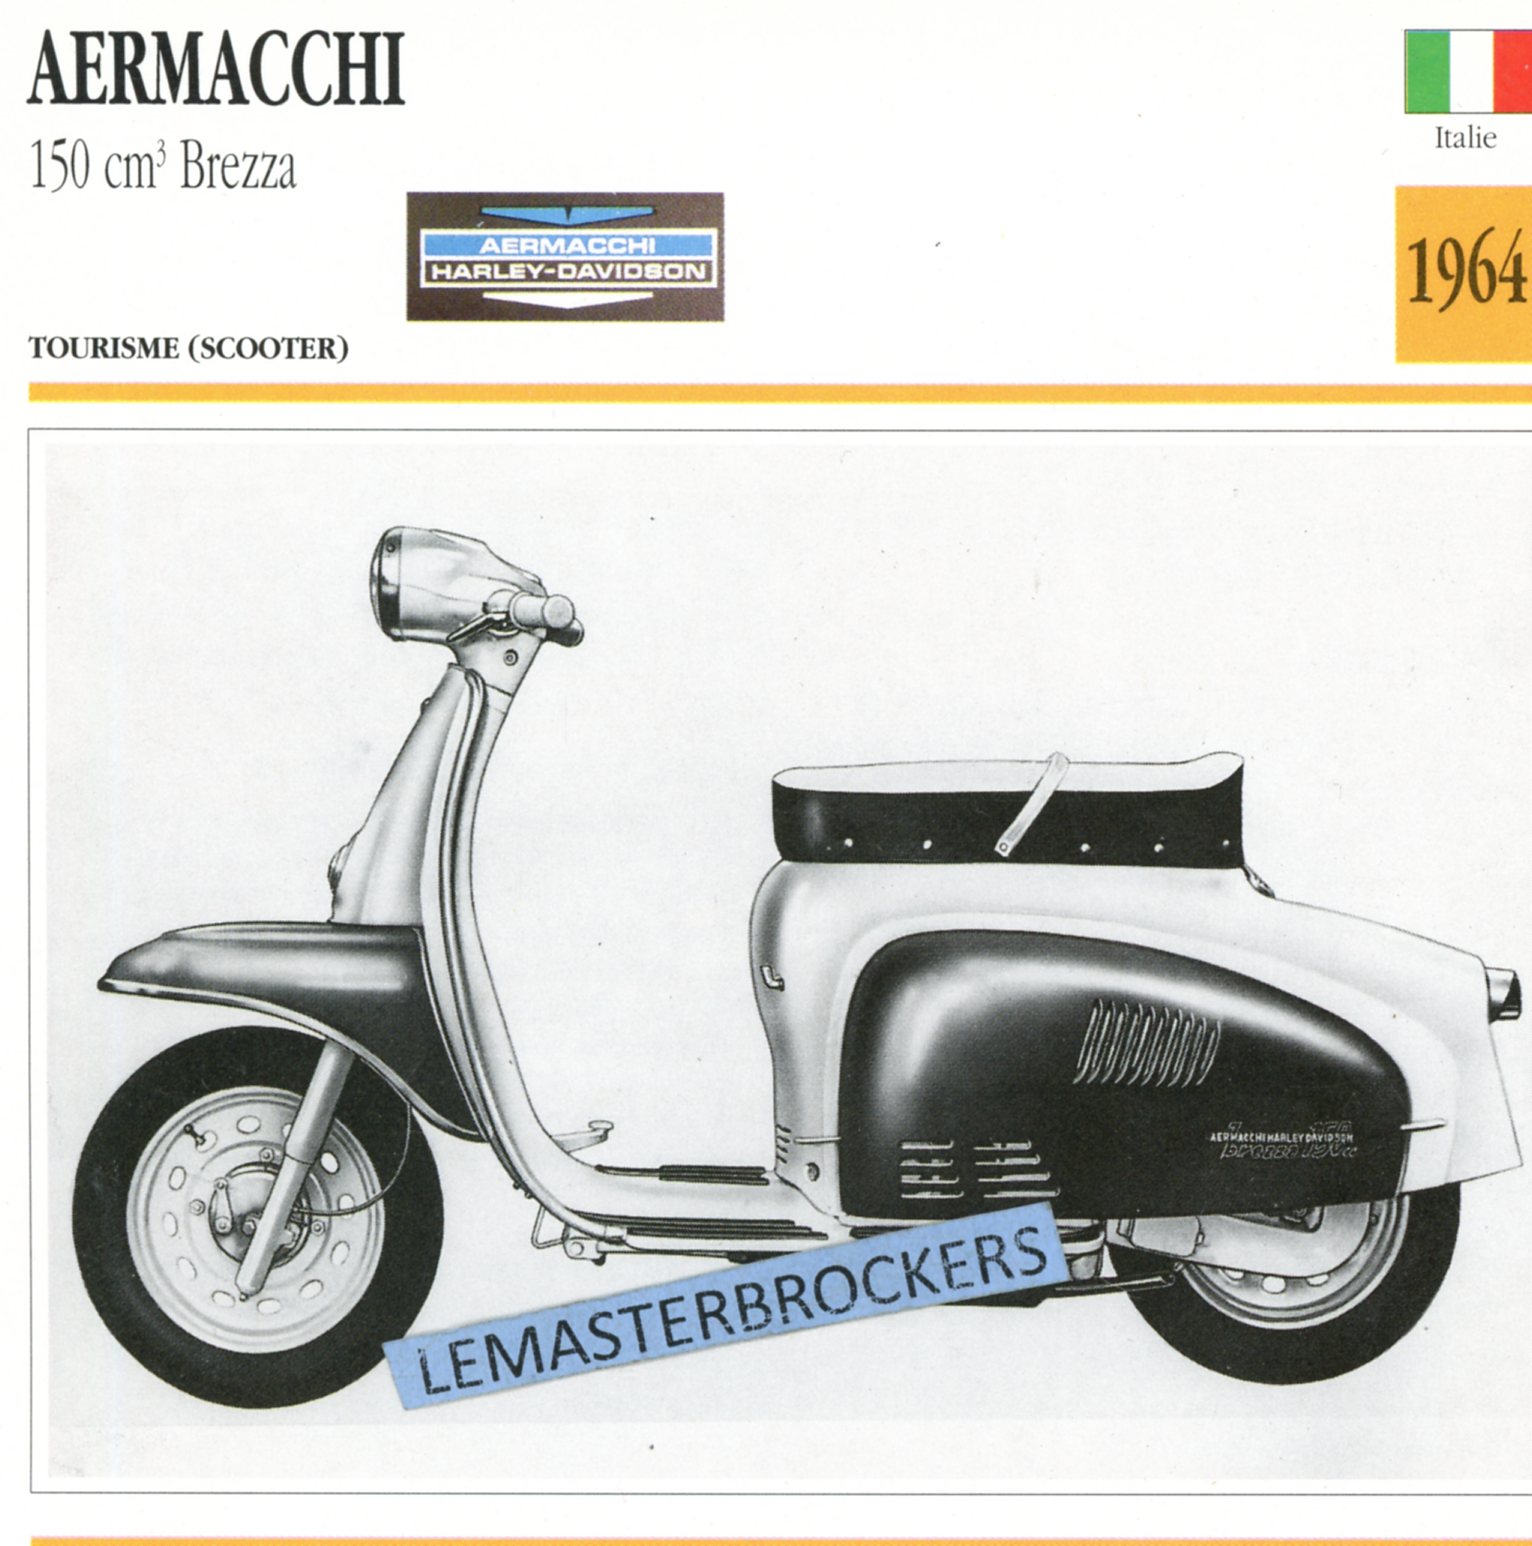 AERMACCHI 150 BREZZA SCOOTER 1964 -CARTE-CARD-FICHE-SCOOTER-LEMASTERBROCKERS